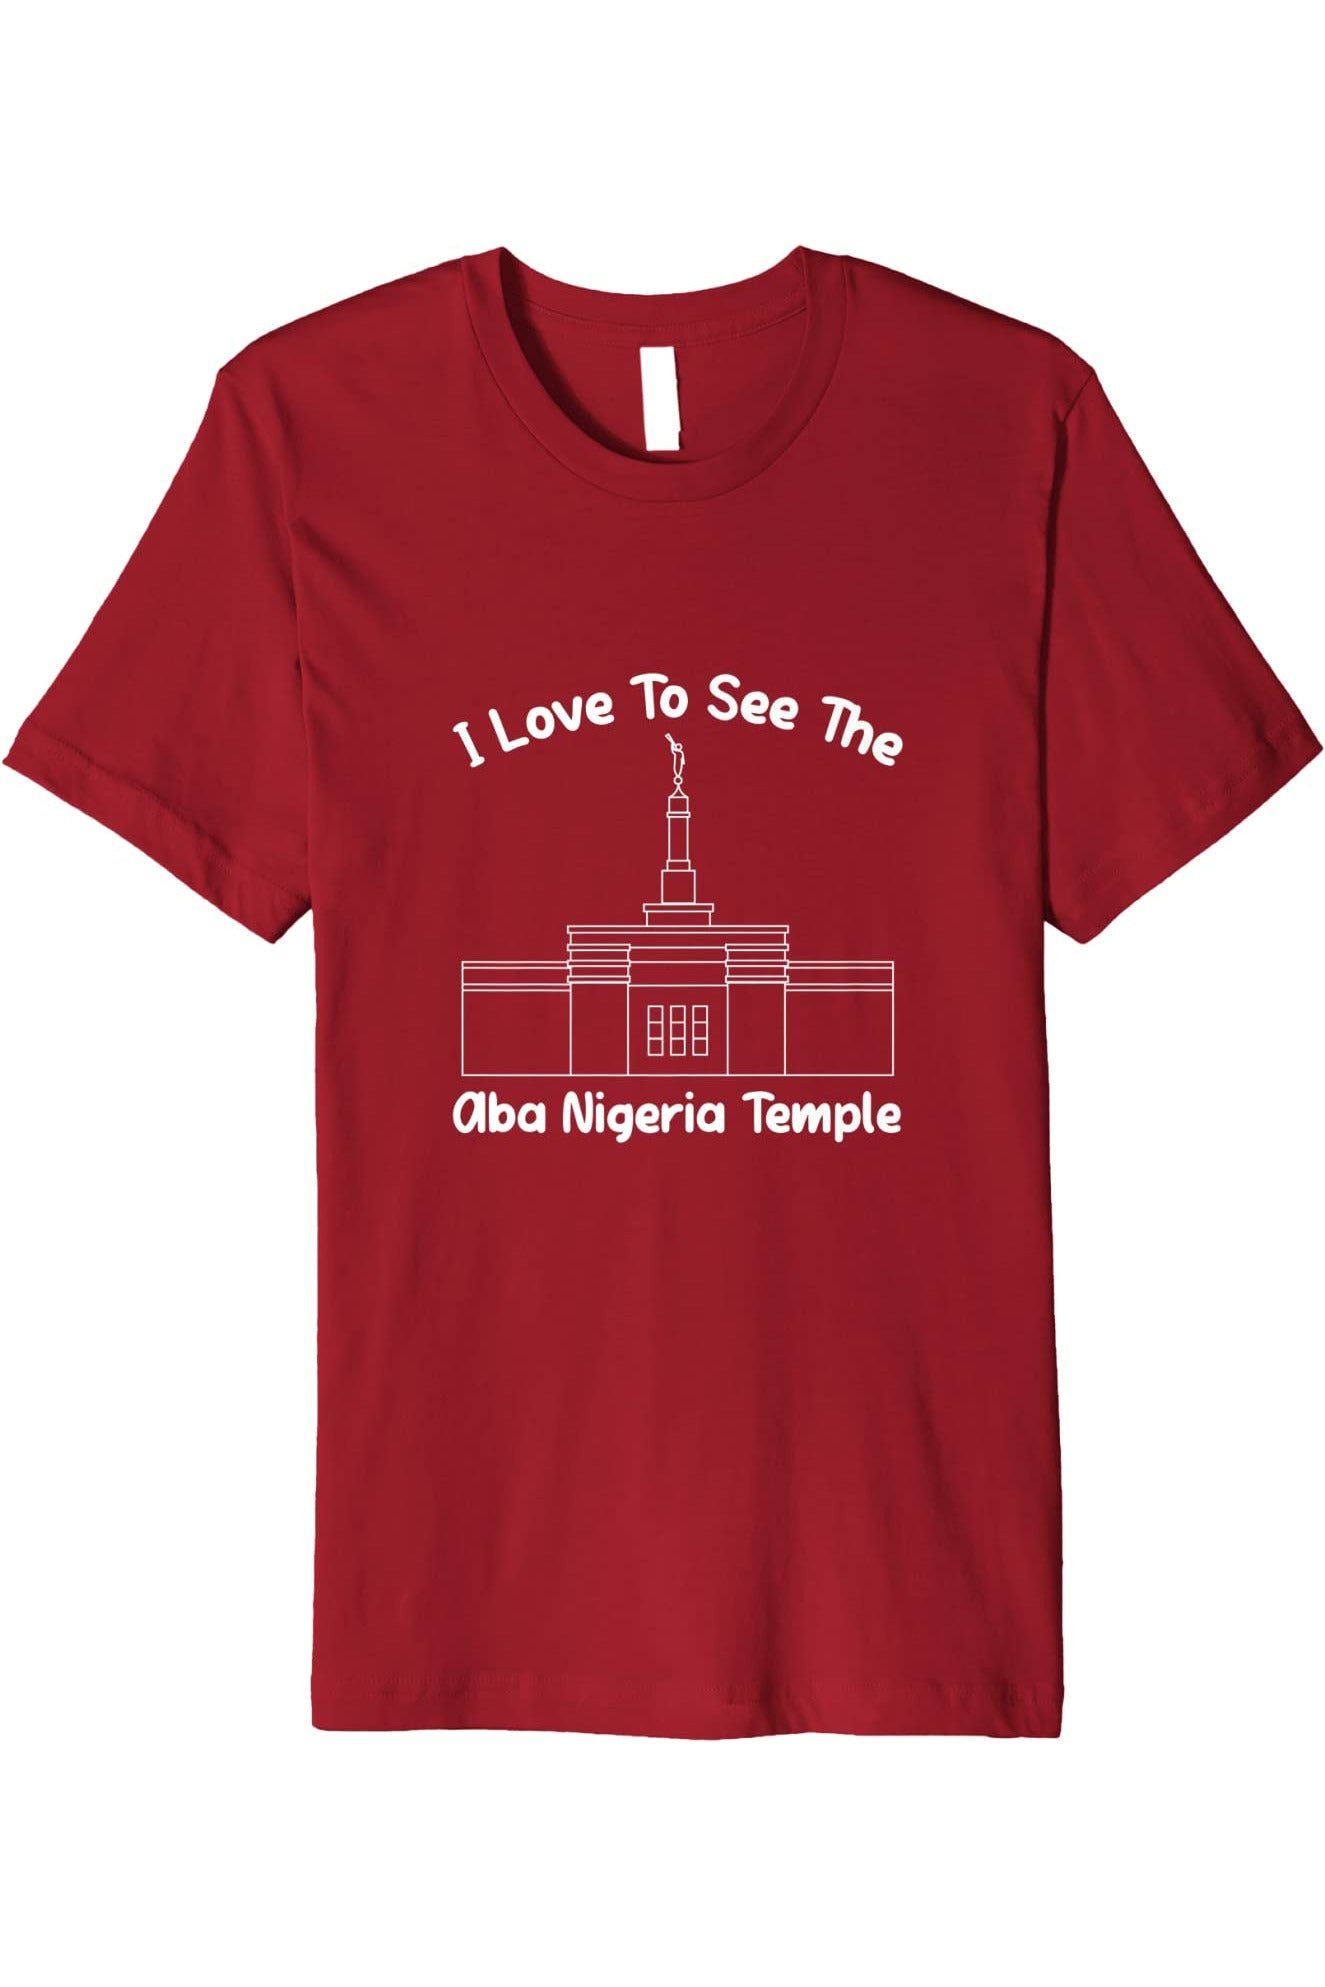 Aba Nigeria Temple T-Shirt - Premium - Primary Style (English) US